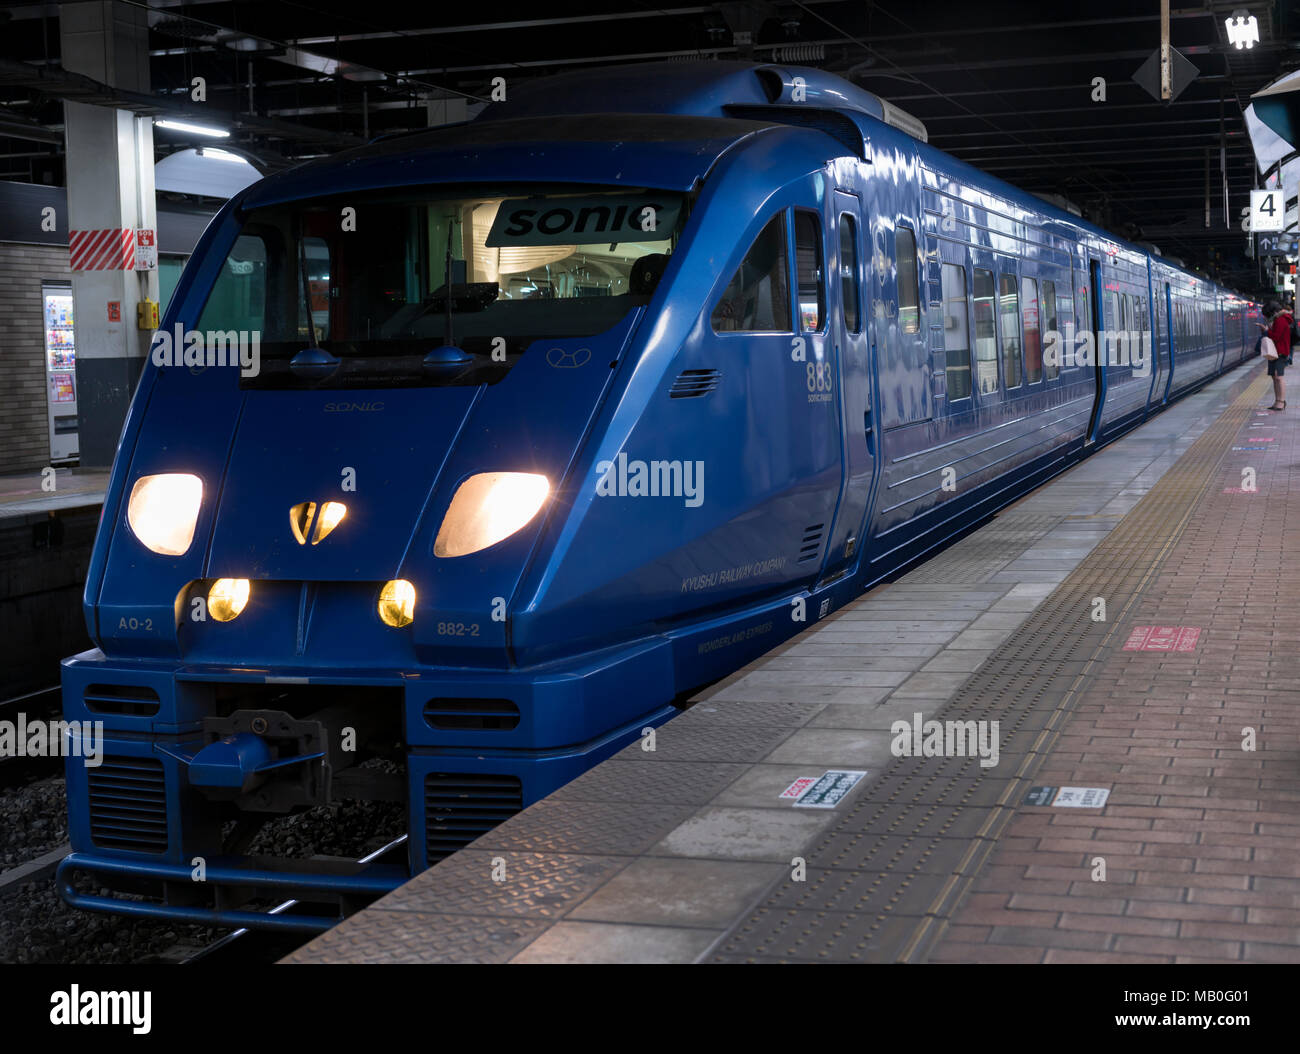 Una rampa in Giappone (JR Kyushu) Serie 883 Sonic il treno alla stazione di Kokura in Kitakyushu, Giappone. Foto Stock